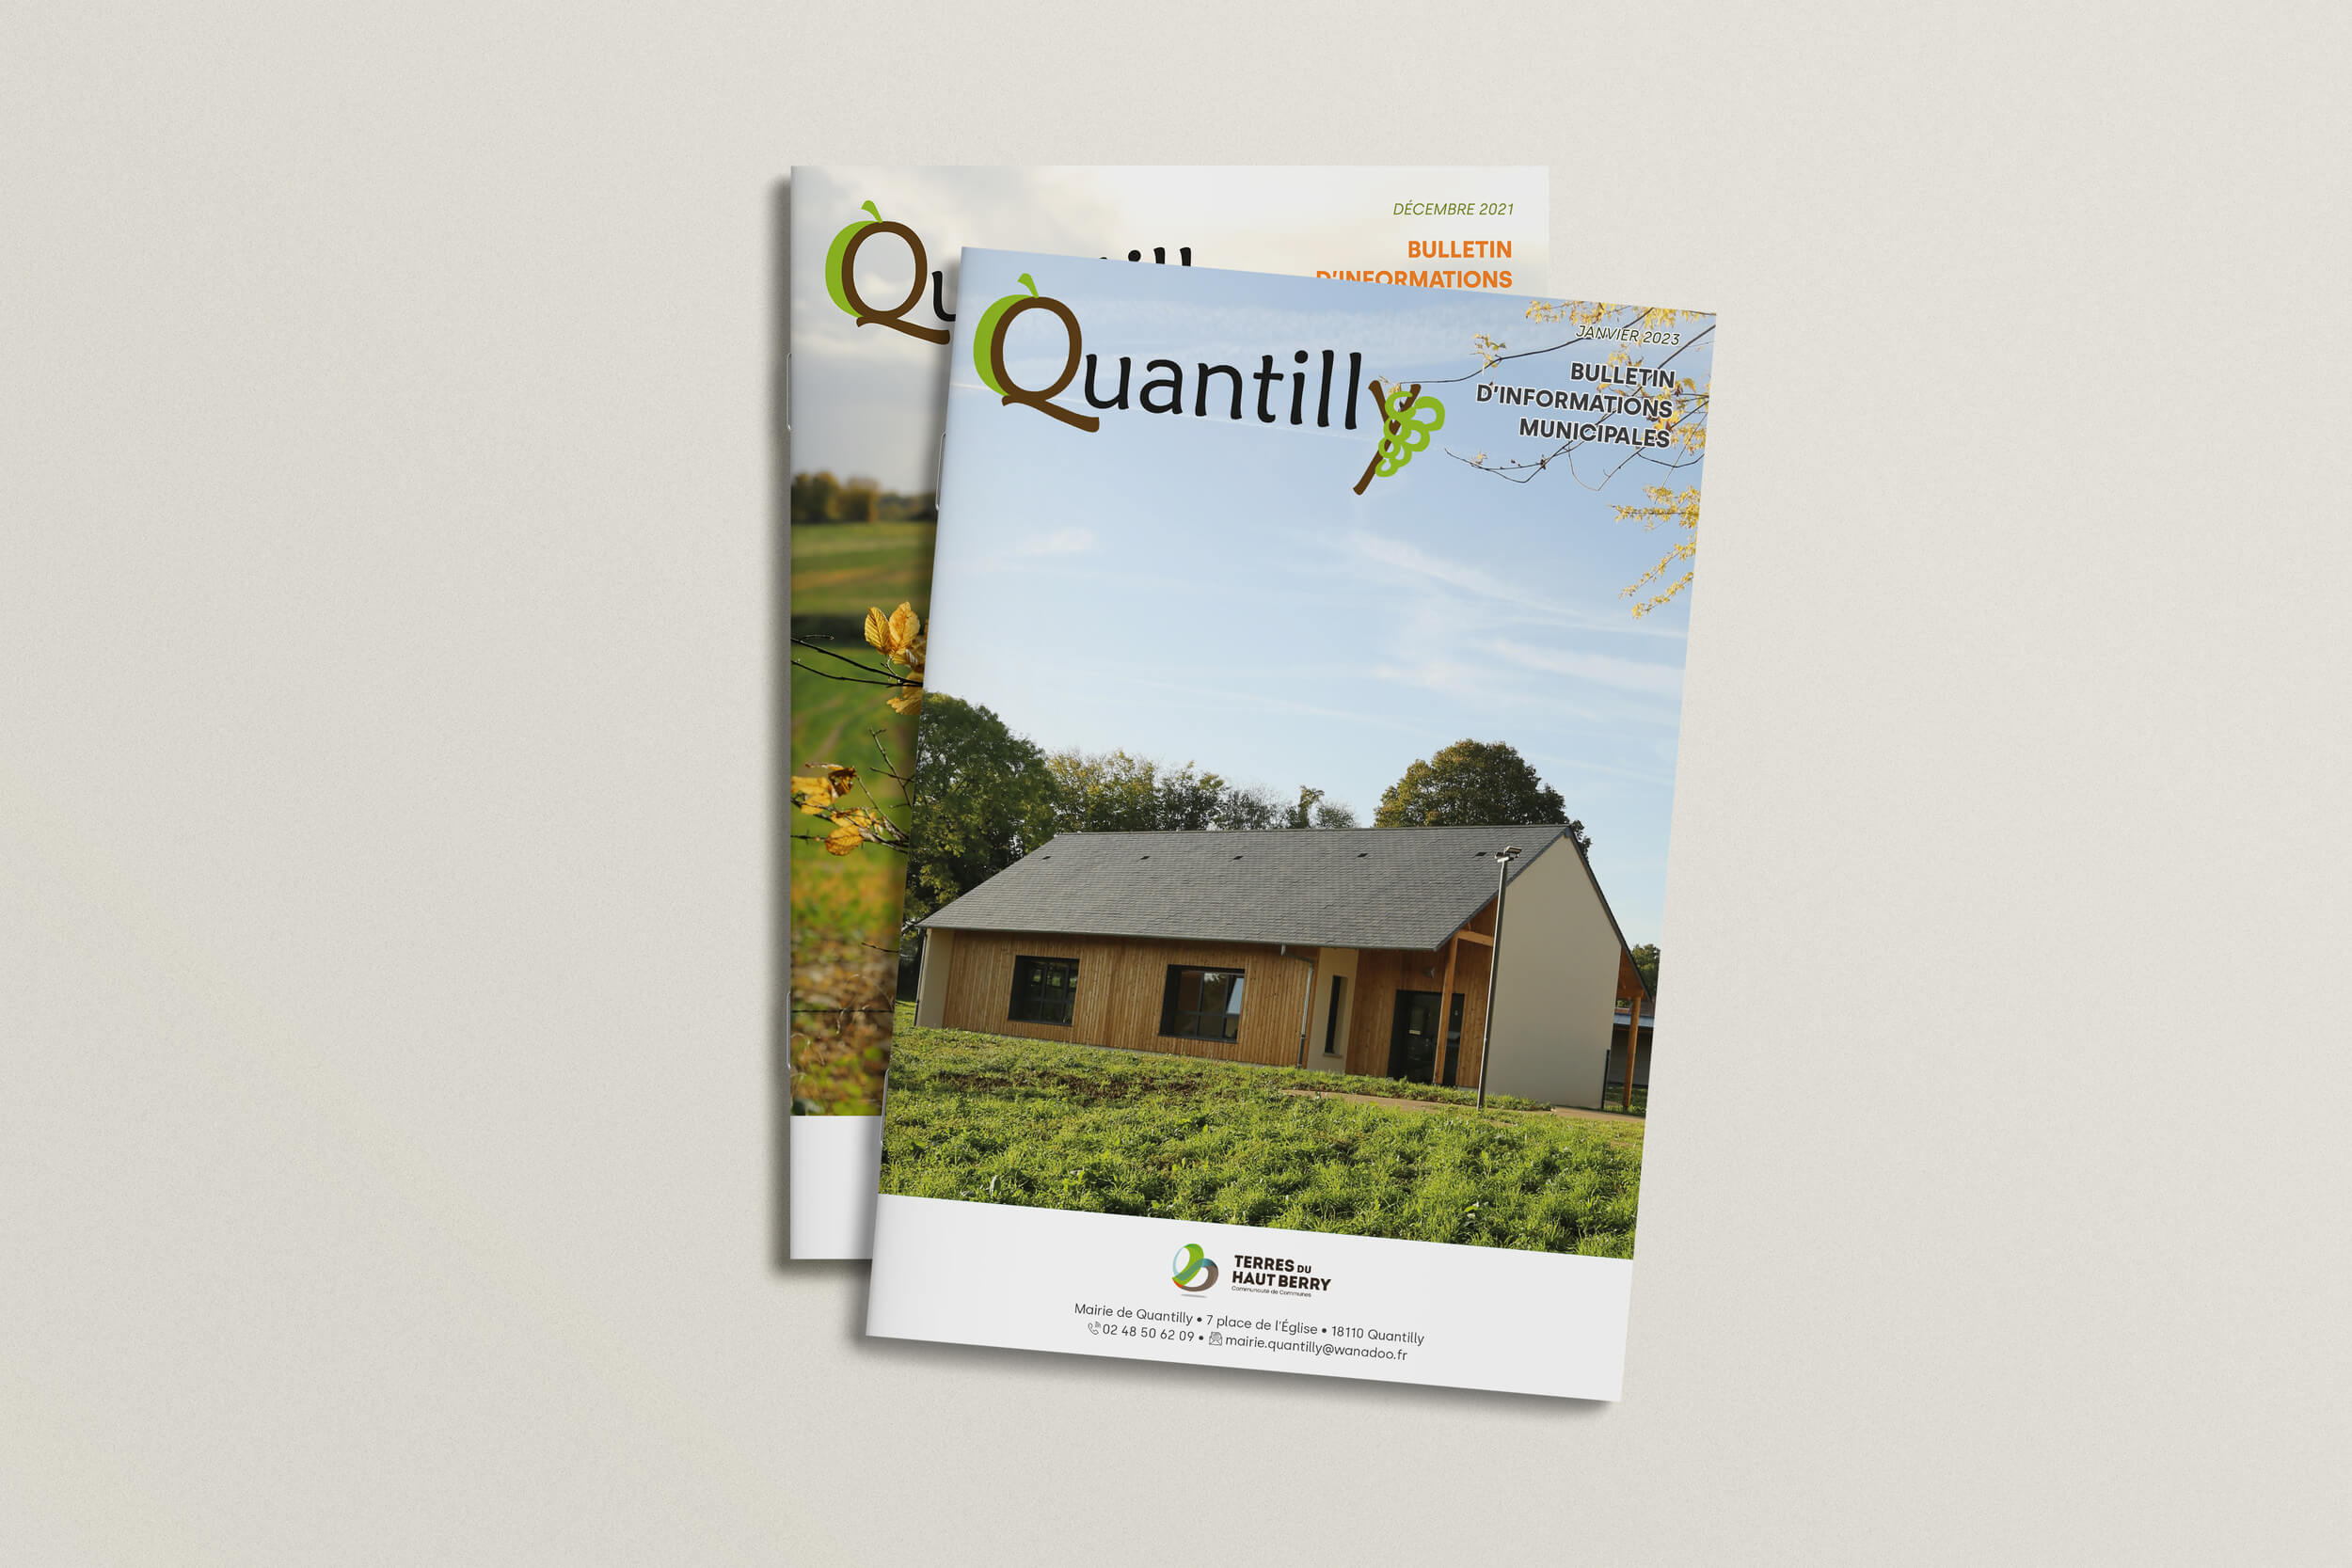 Quantilly_Bulletin-municipal-annuel